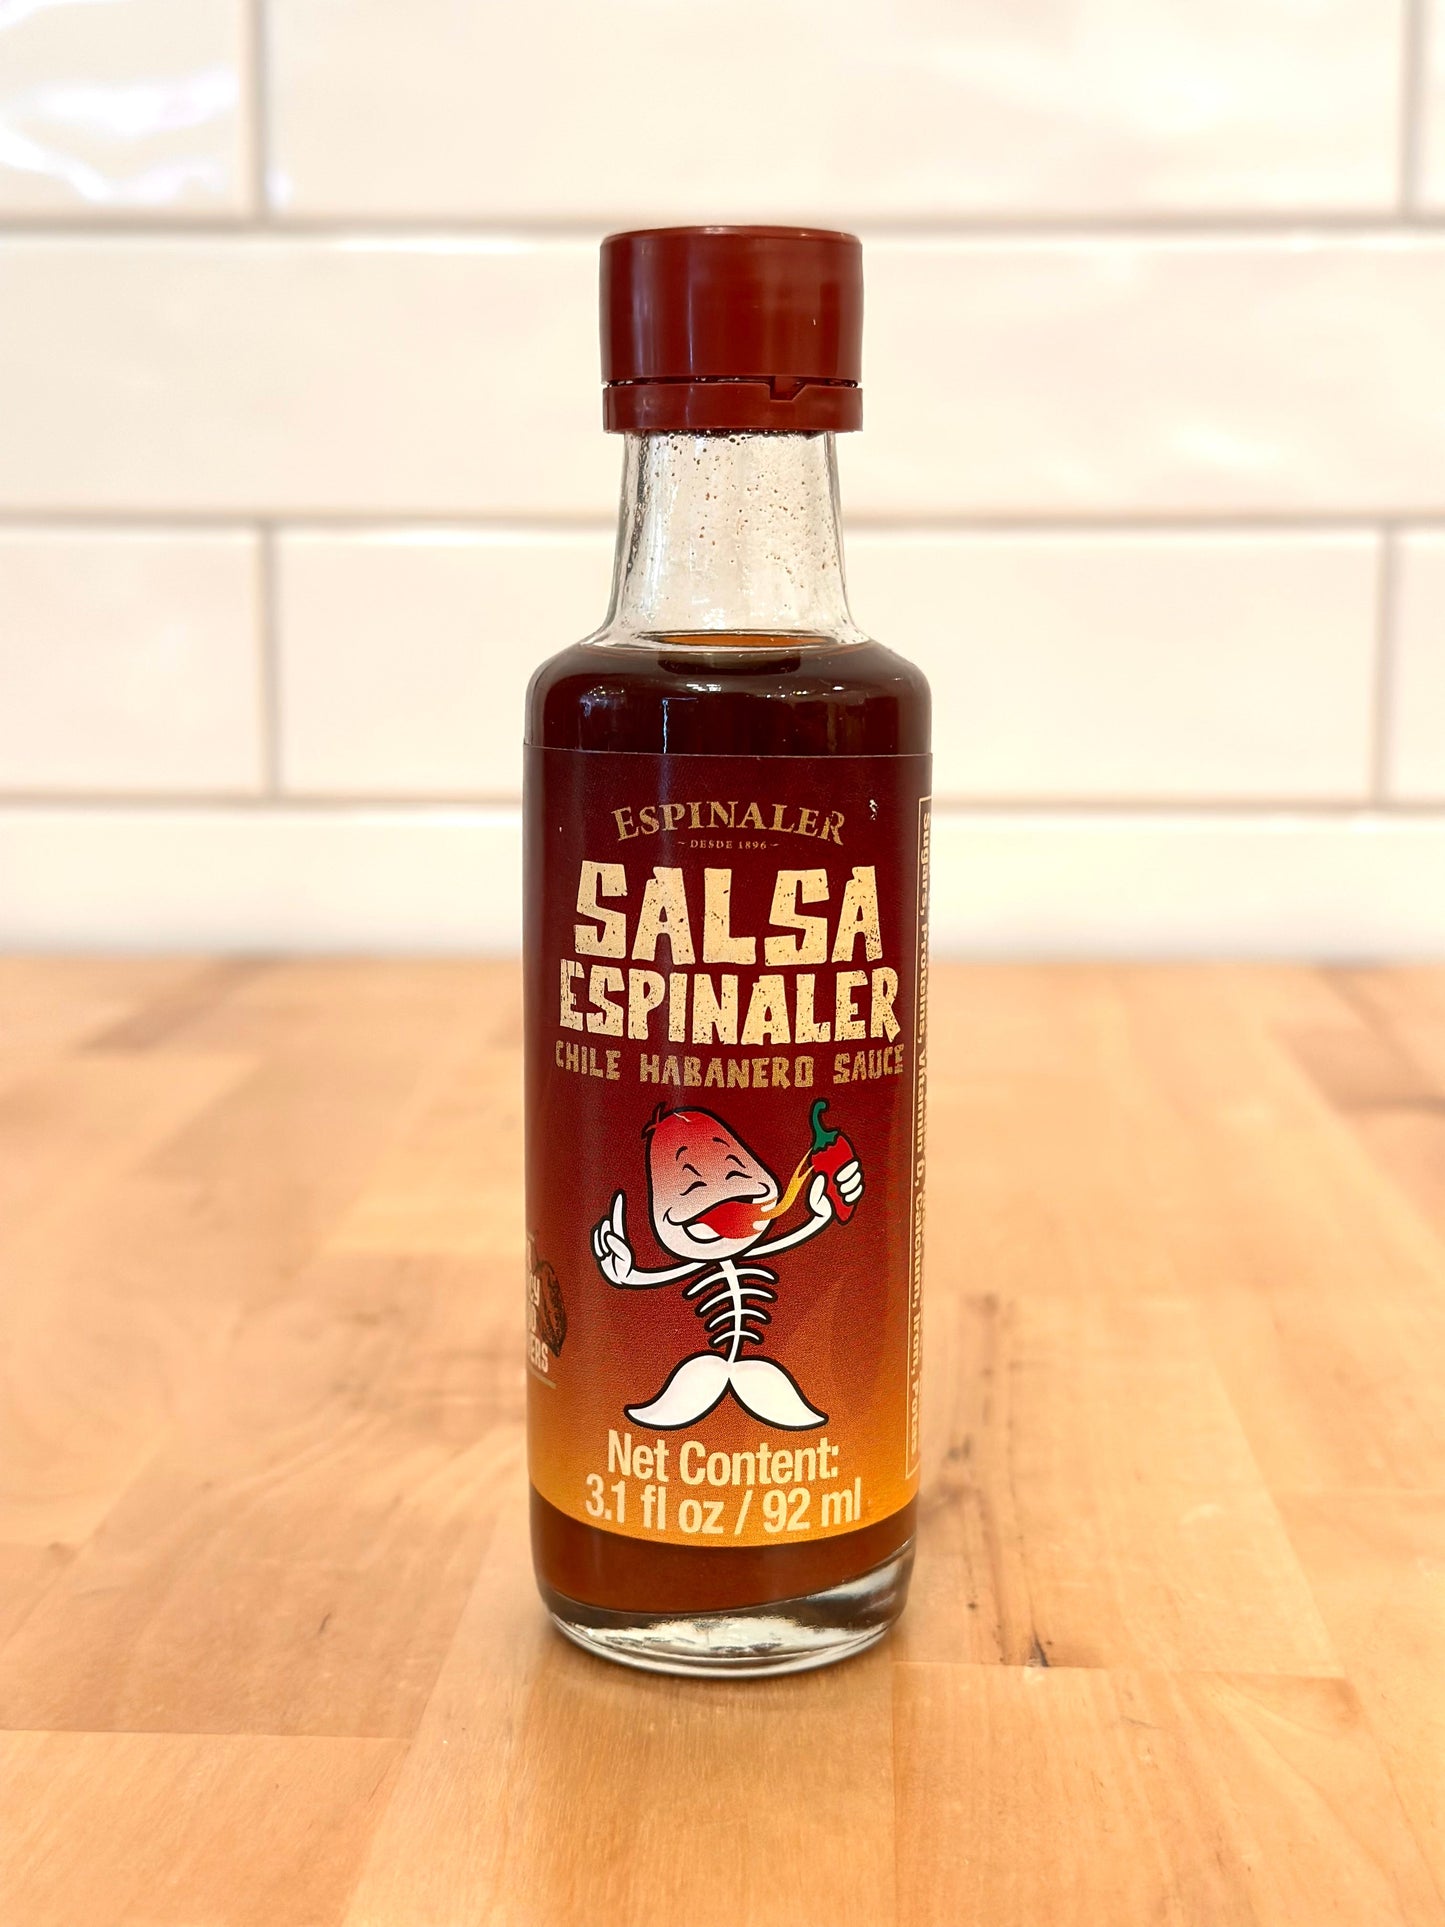 Salsa Espinaler Chile Habanero Sauce, Espinaler, Spain (92ml Bottle)